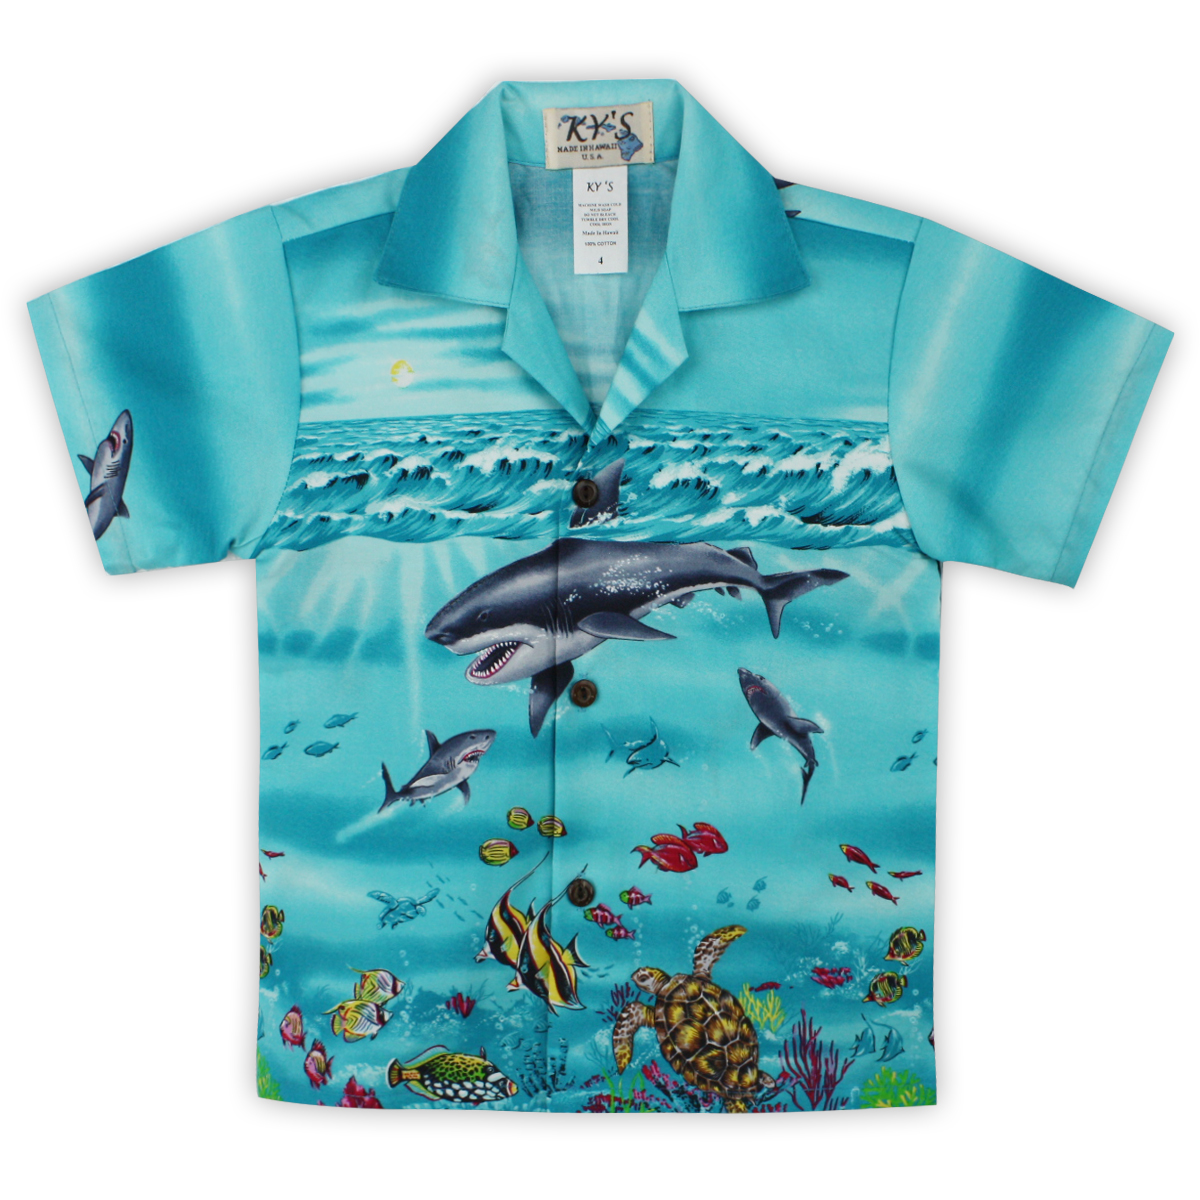 Think tragedy hire Boy's Hawaiian Shirt - Sharky - Teal Blue